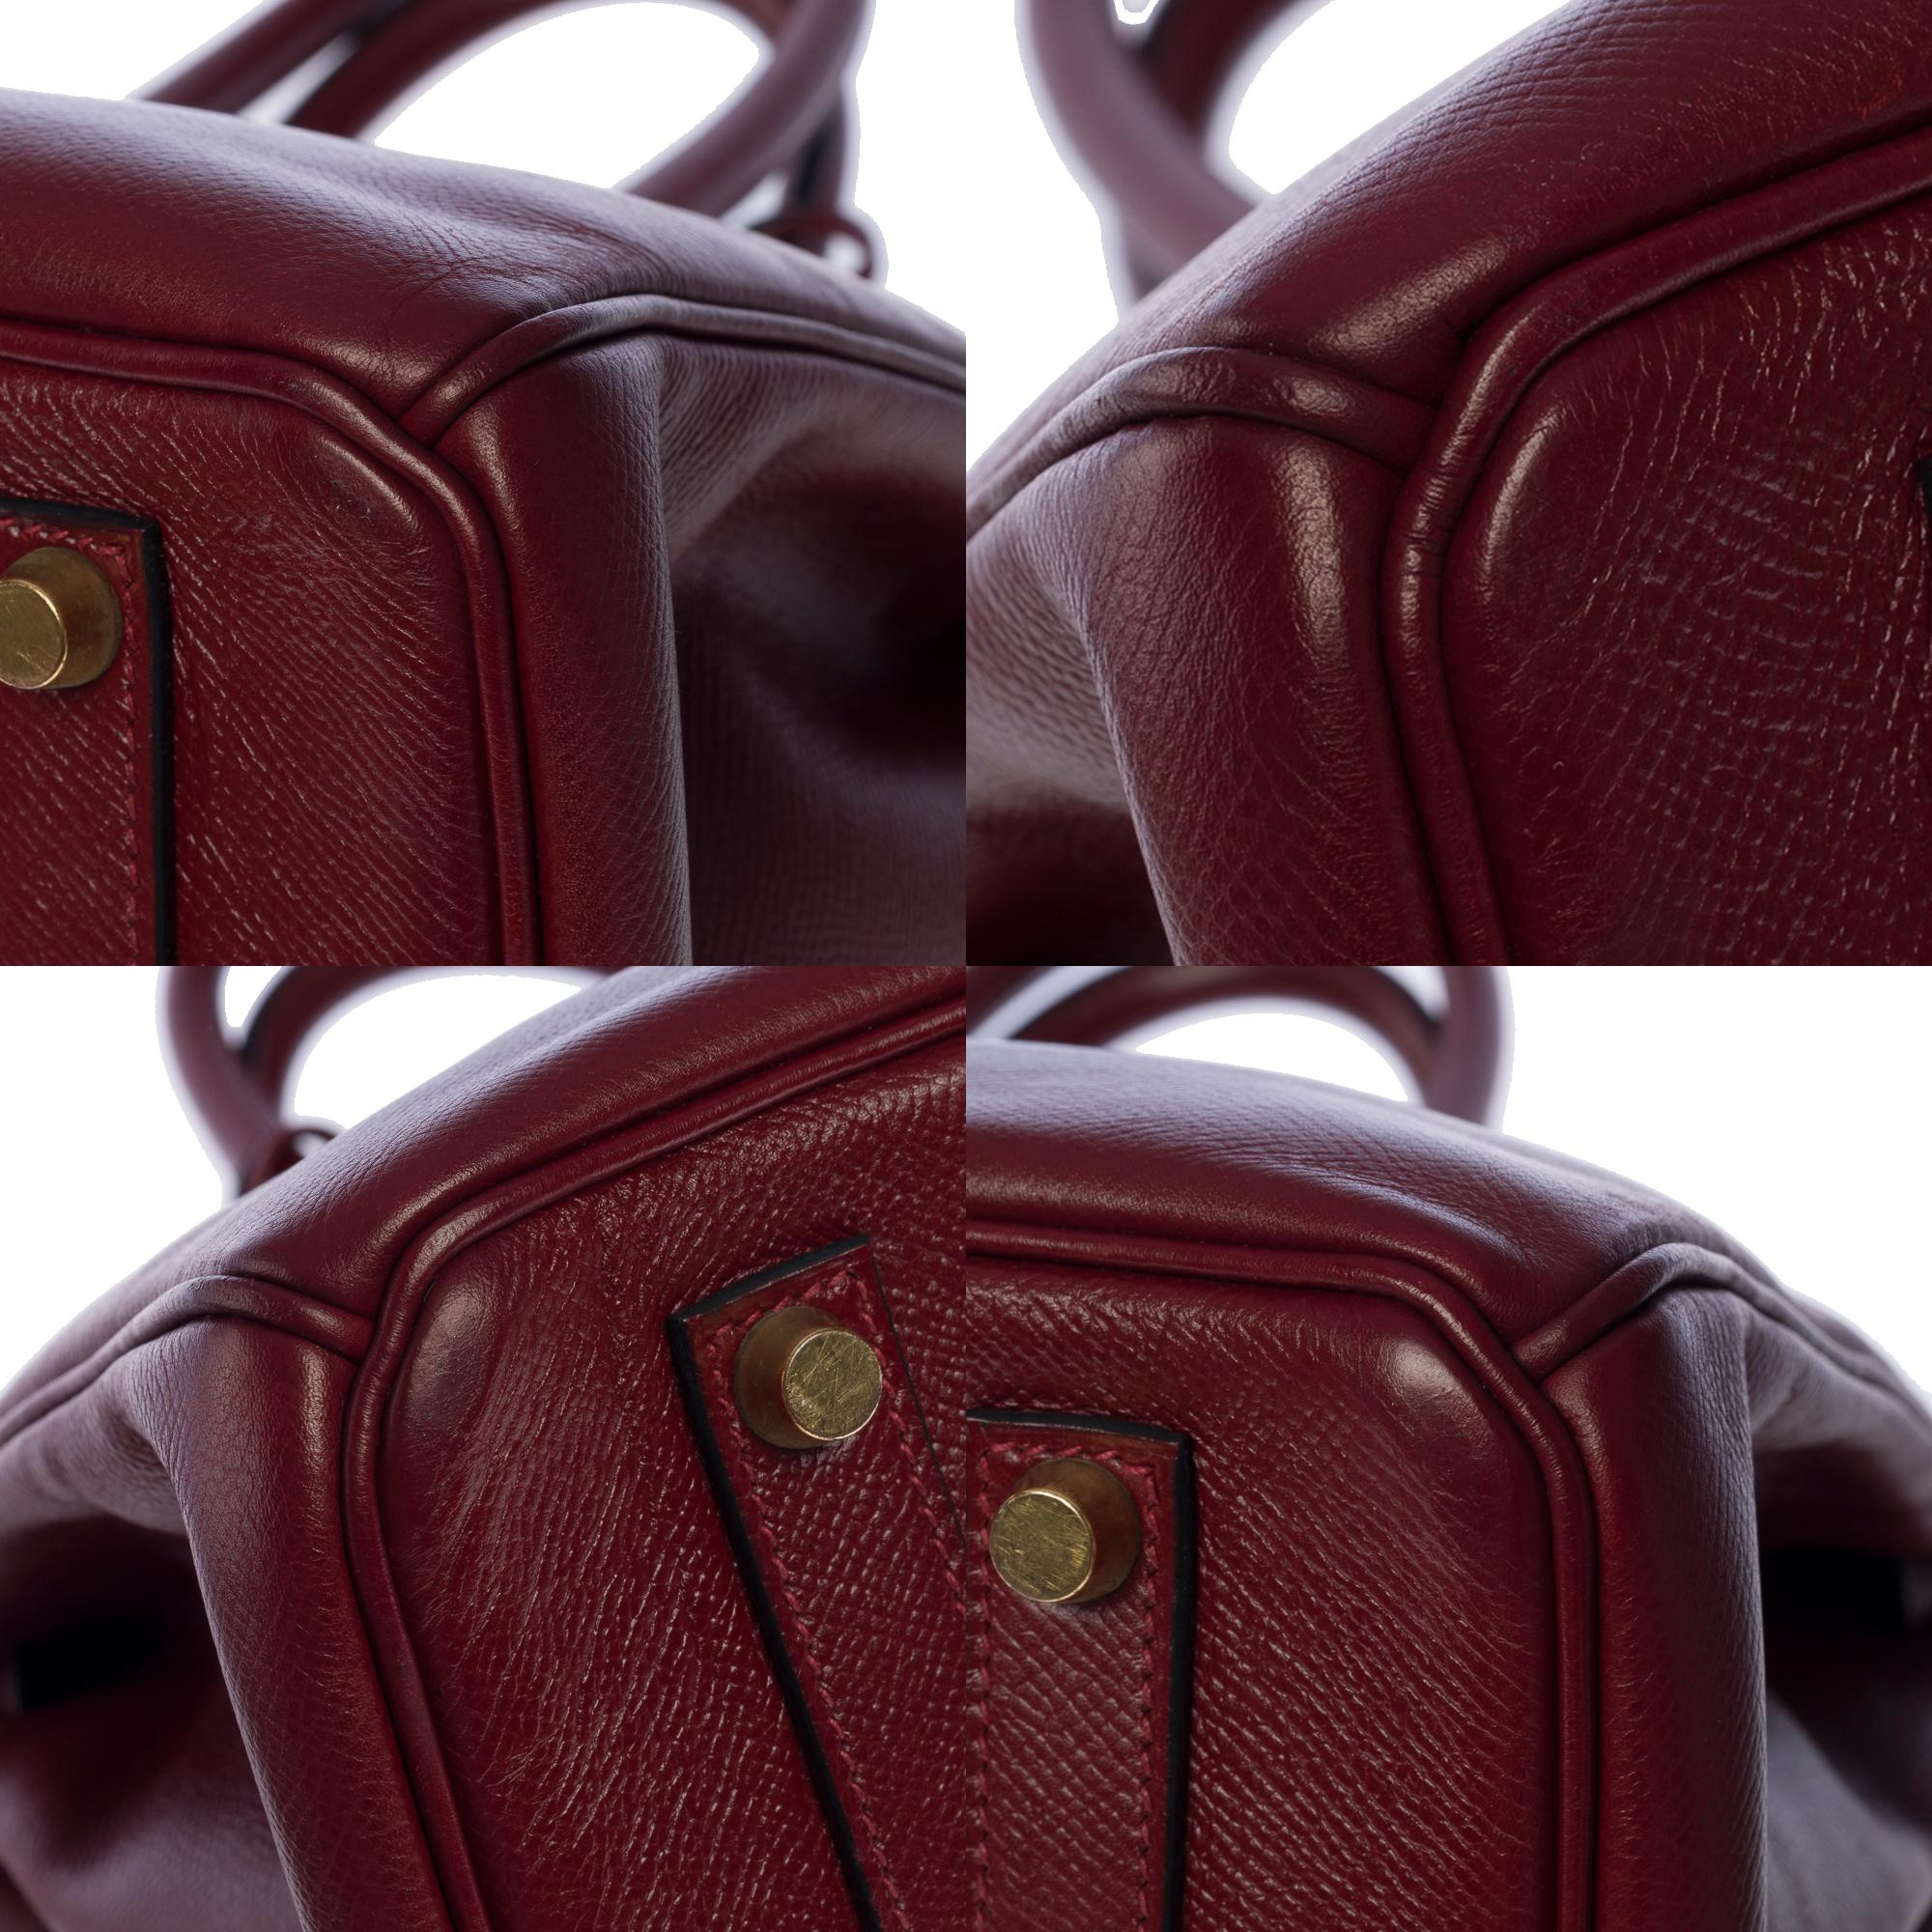 Stunning Hermès Birkin 35 handbag in Rouge H (Burgundy) epsom leather, GHW 6